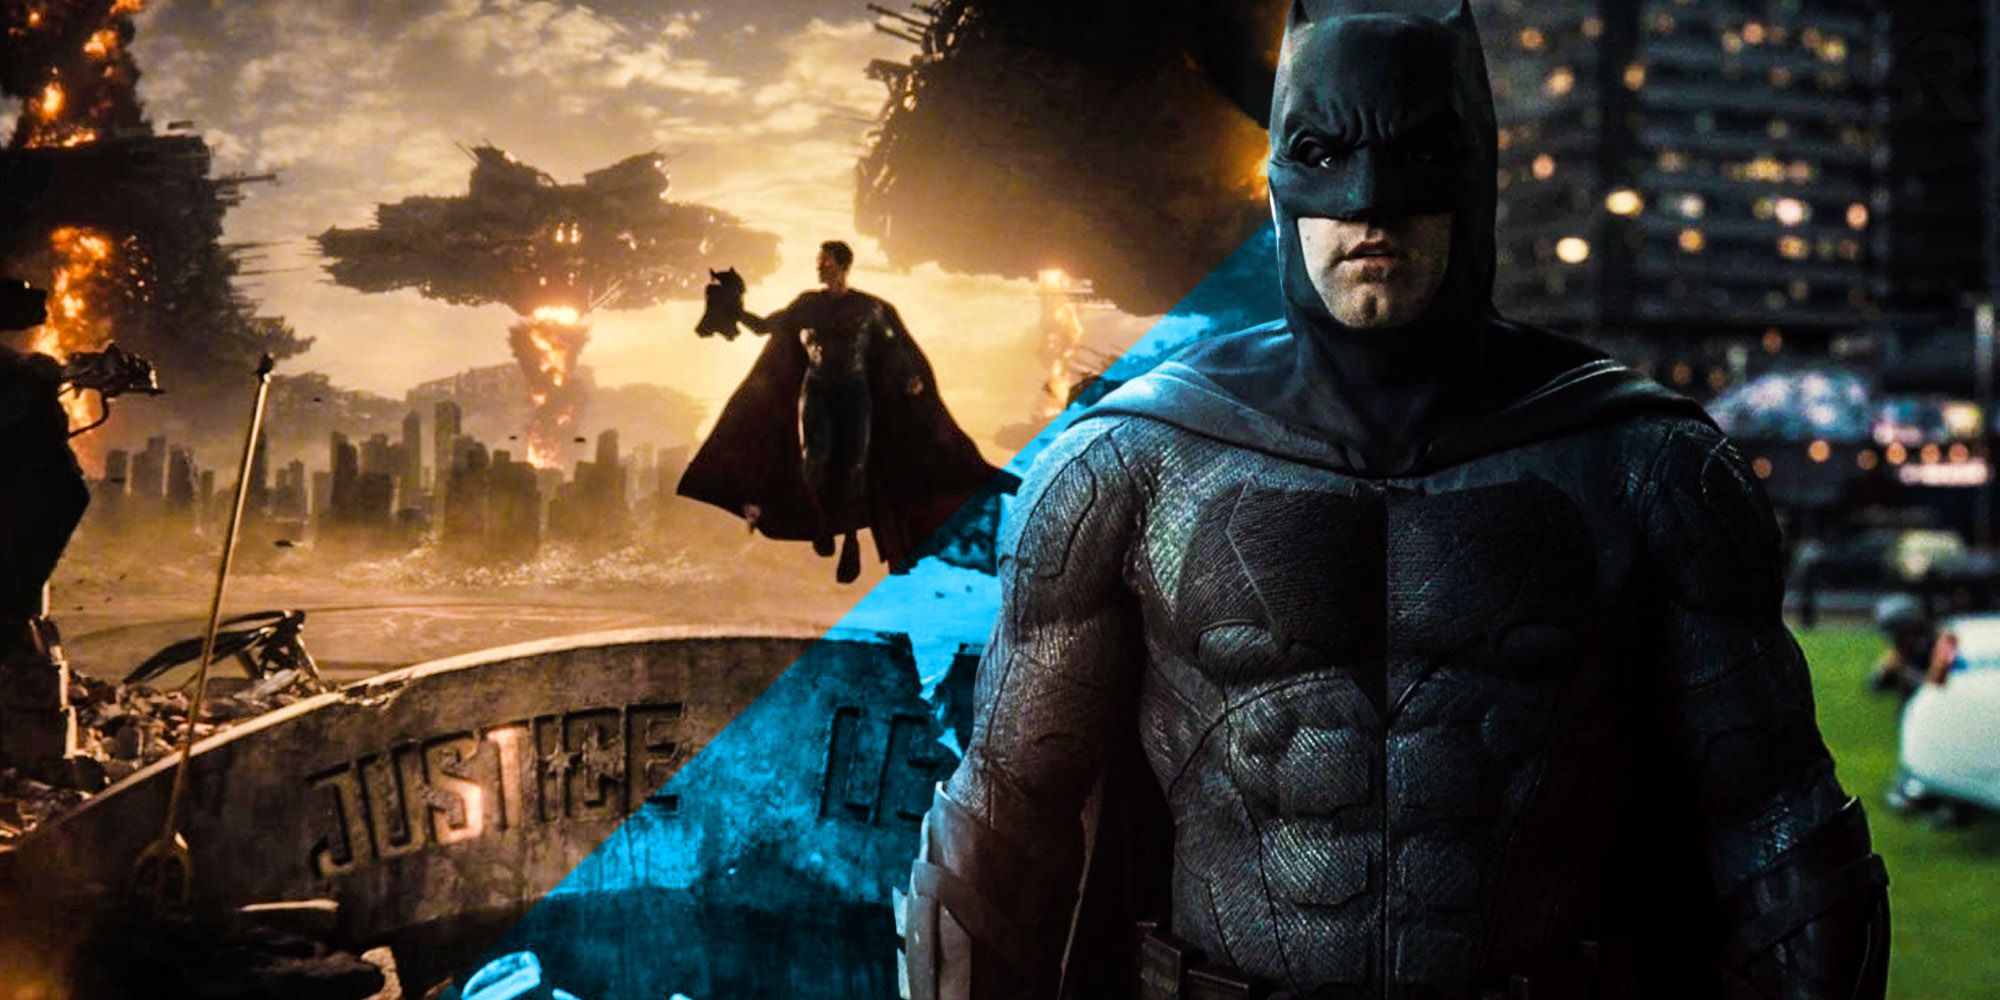 Ben Affleck batman death justice league 2 snyder cut